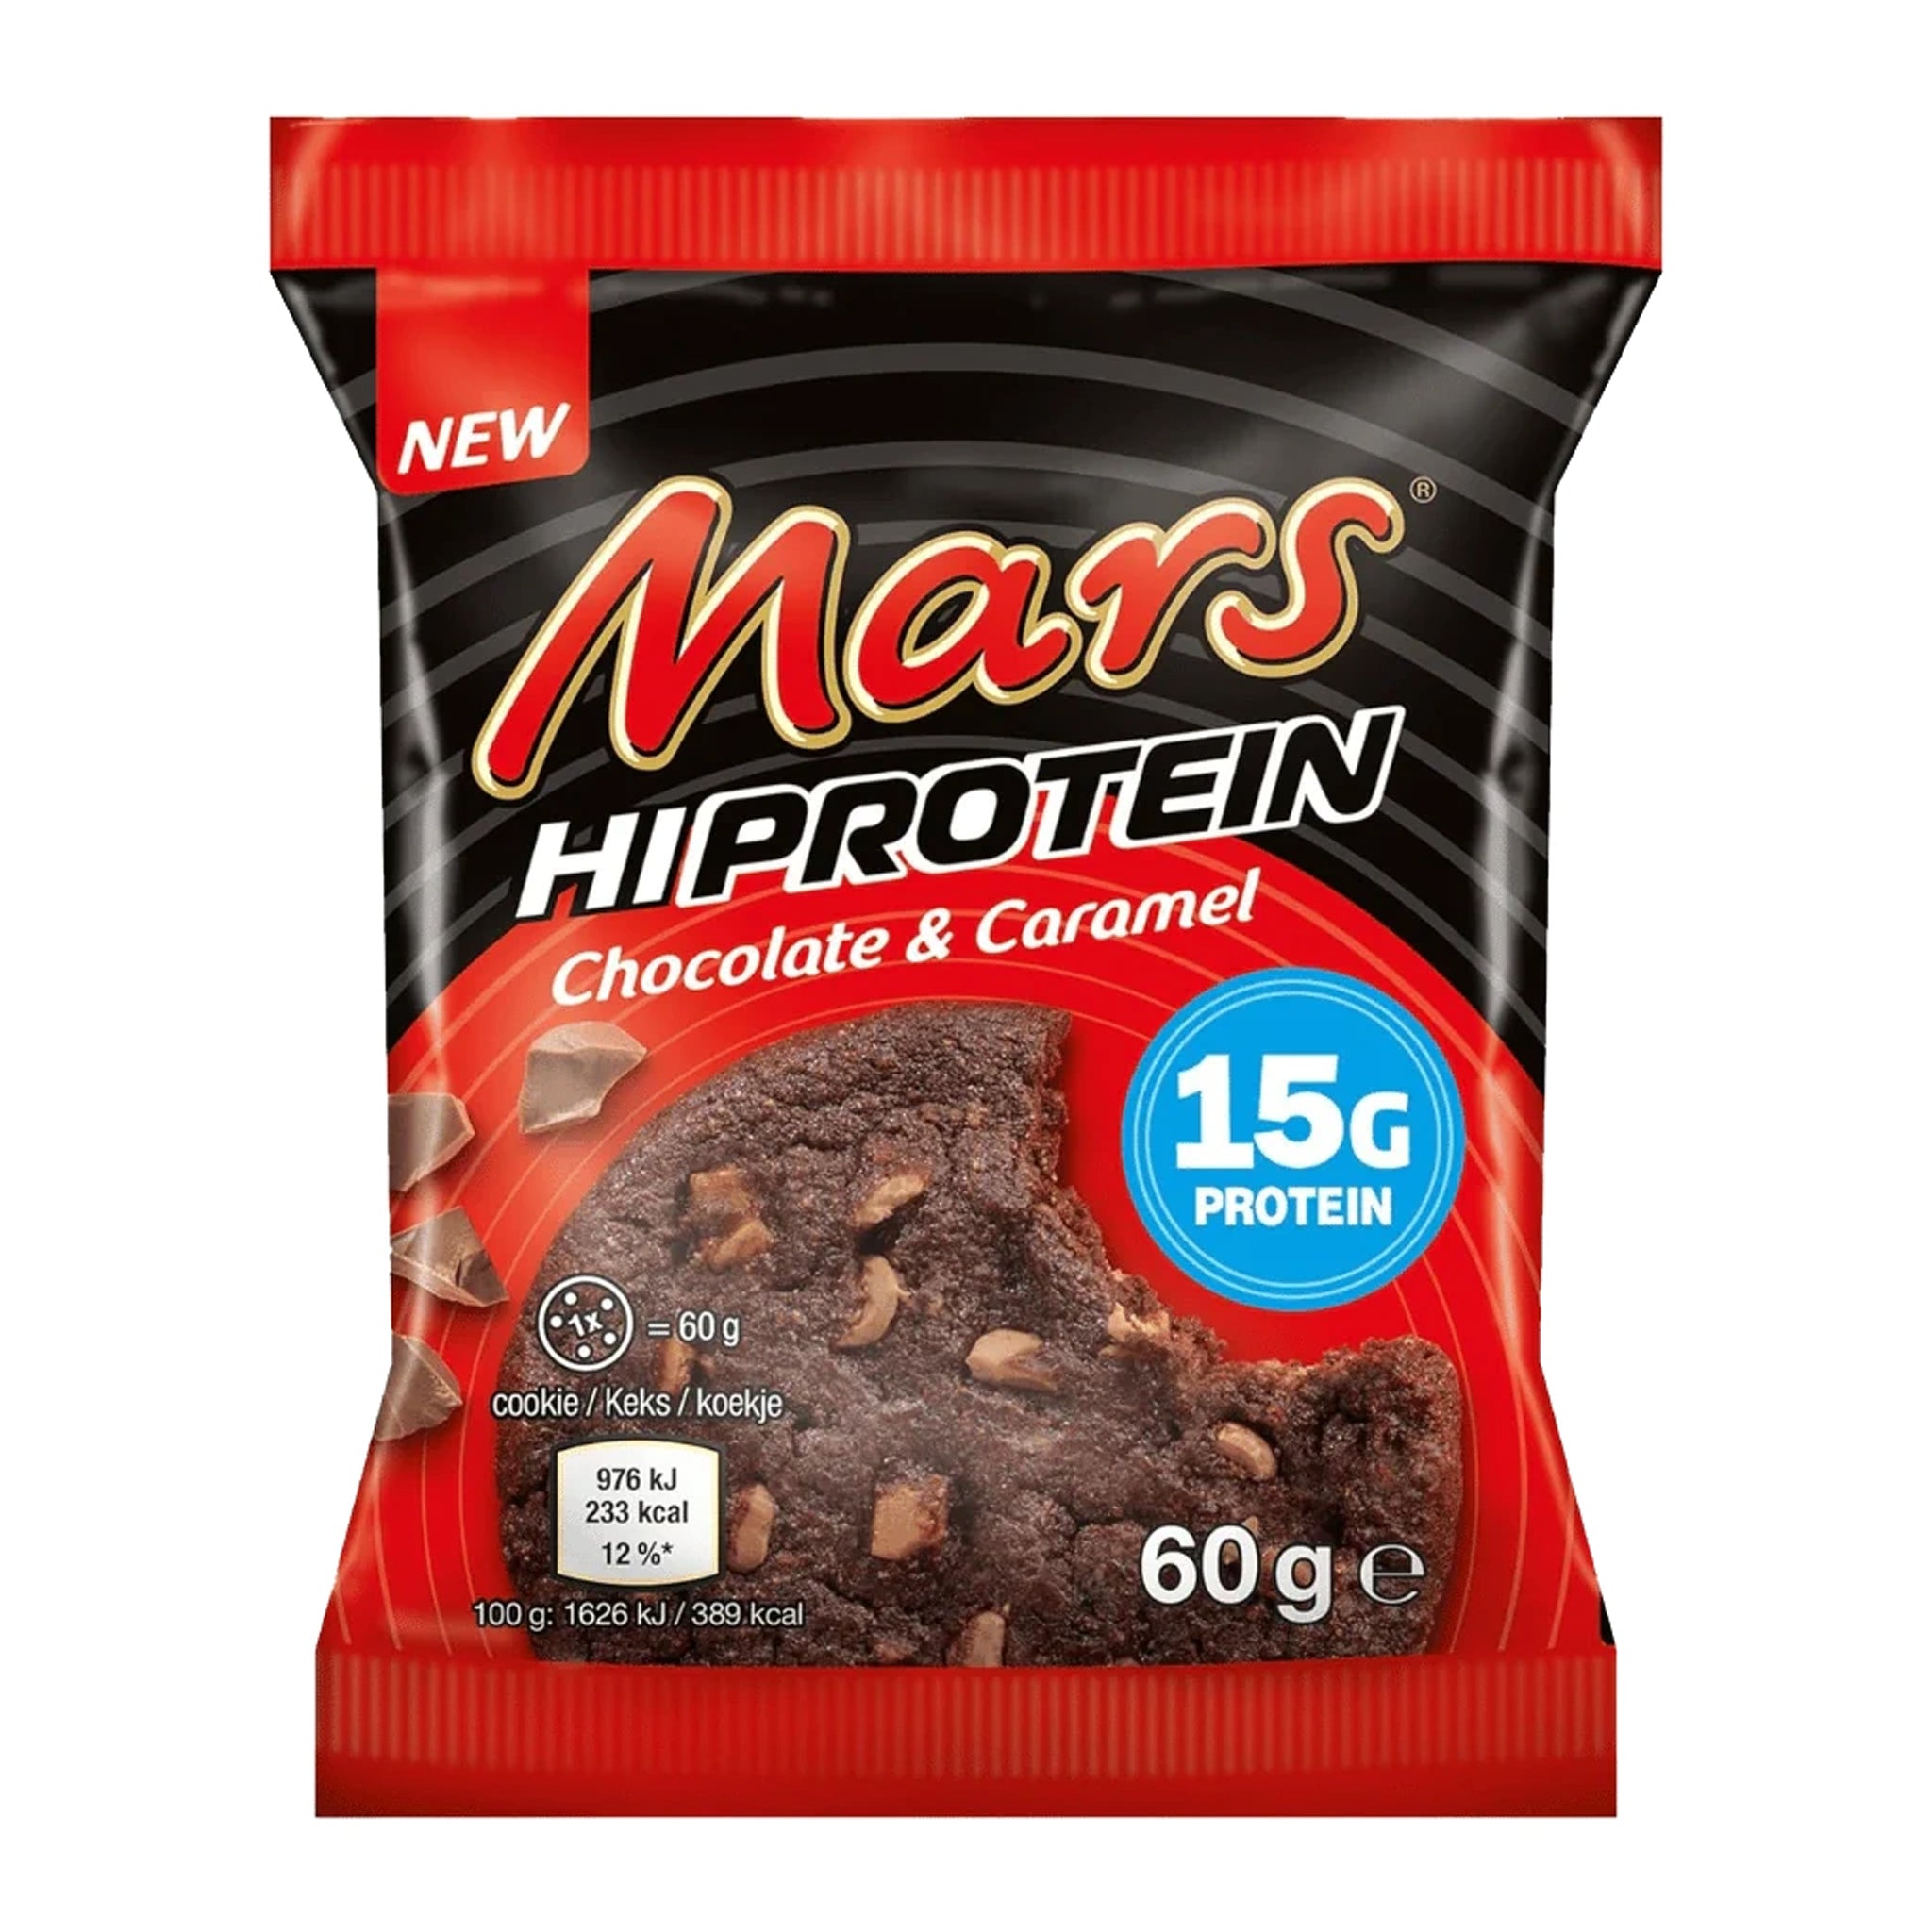 Mars Chocolate & Caramel Butter Hi Protein מארס עוגיית פרוטאין בטעם שוקולד וקרמל